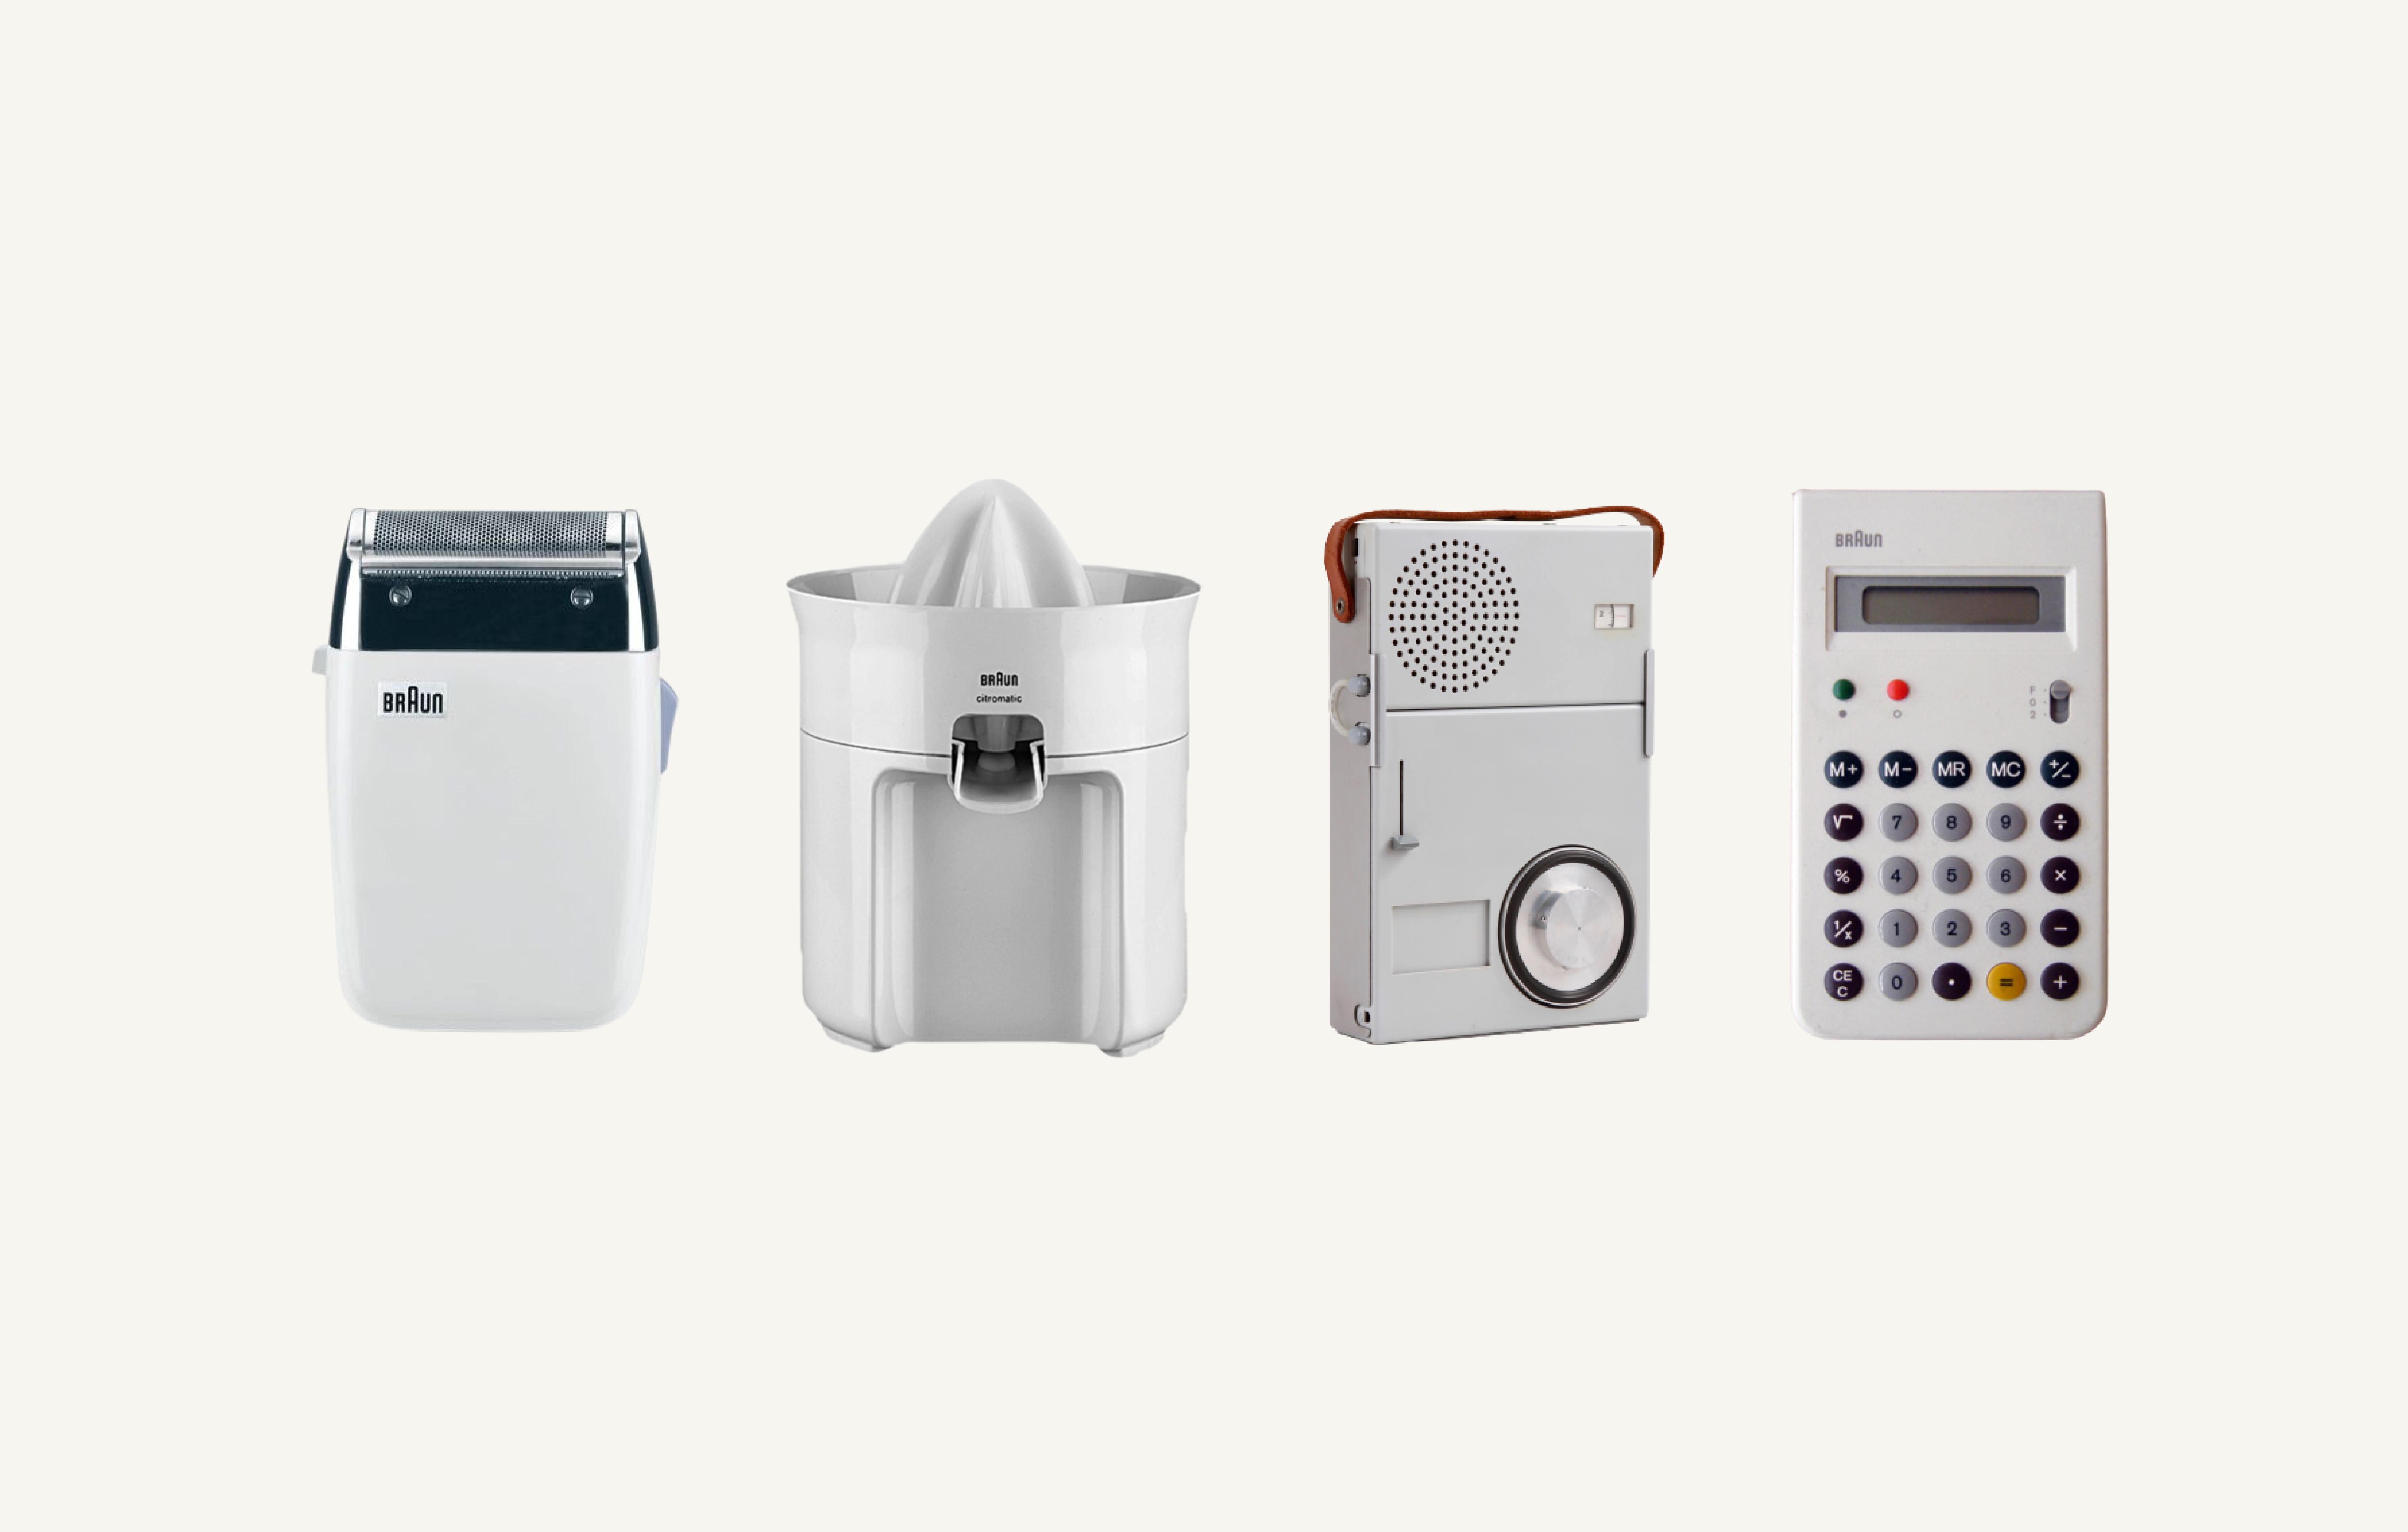 A series of Braun items: a razor, a citrus squeezer, a radio, and a calculator